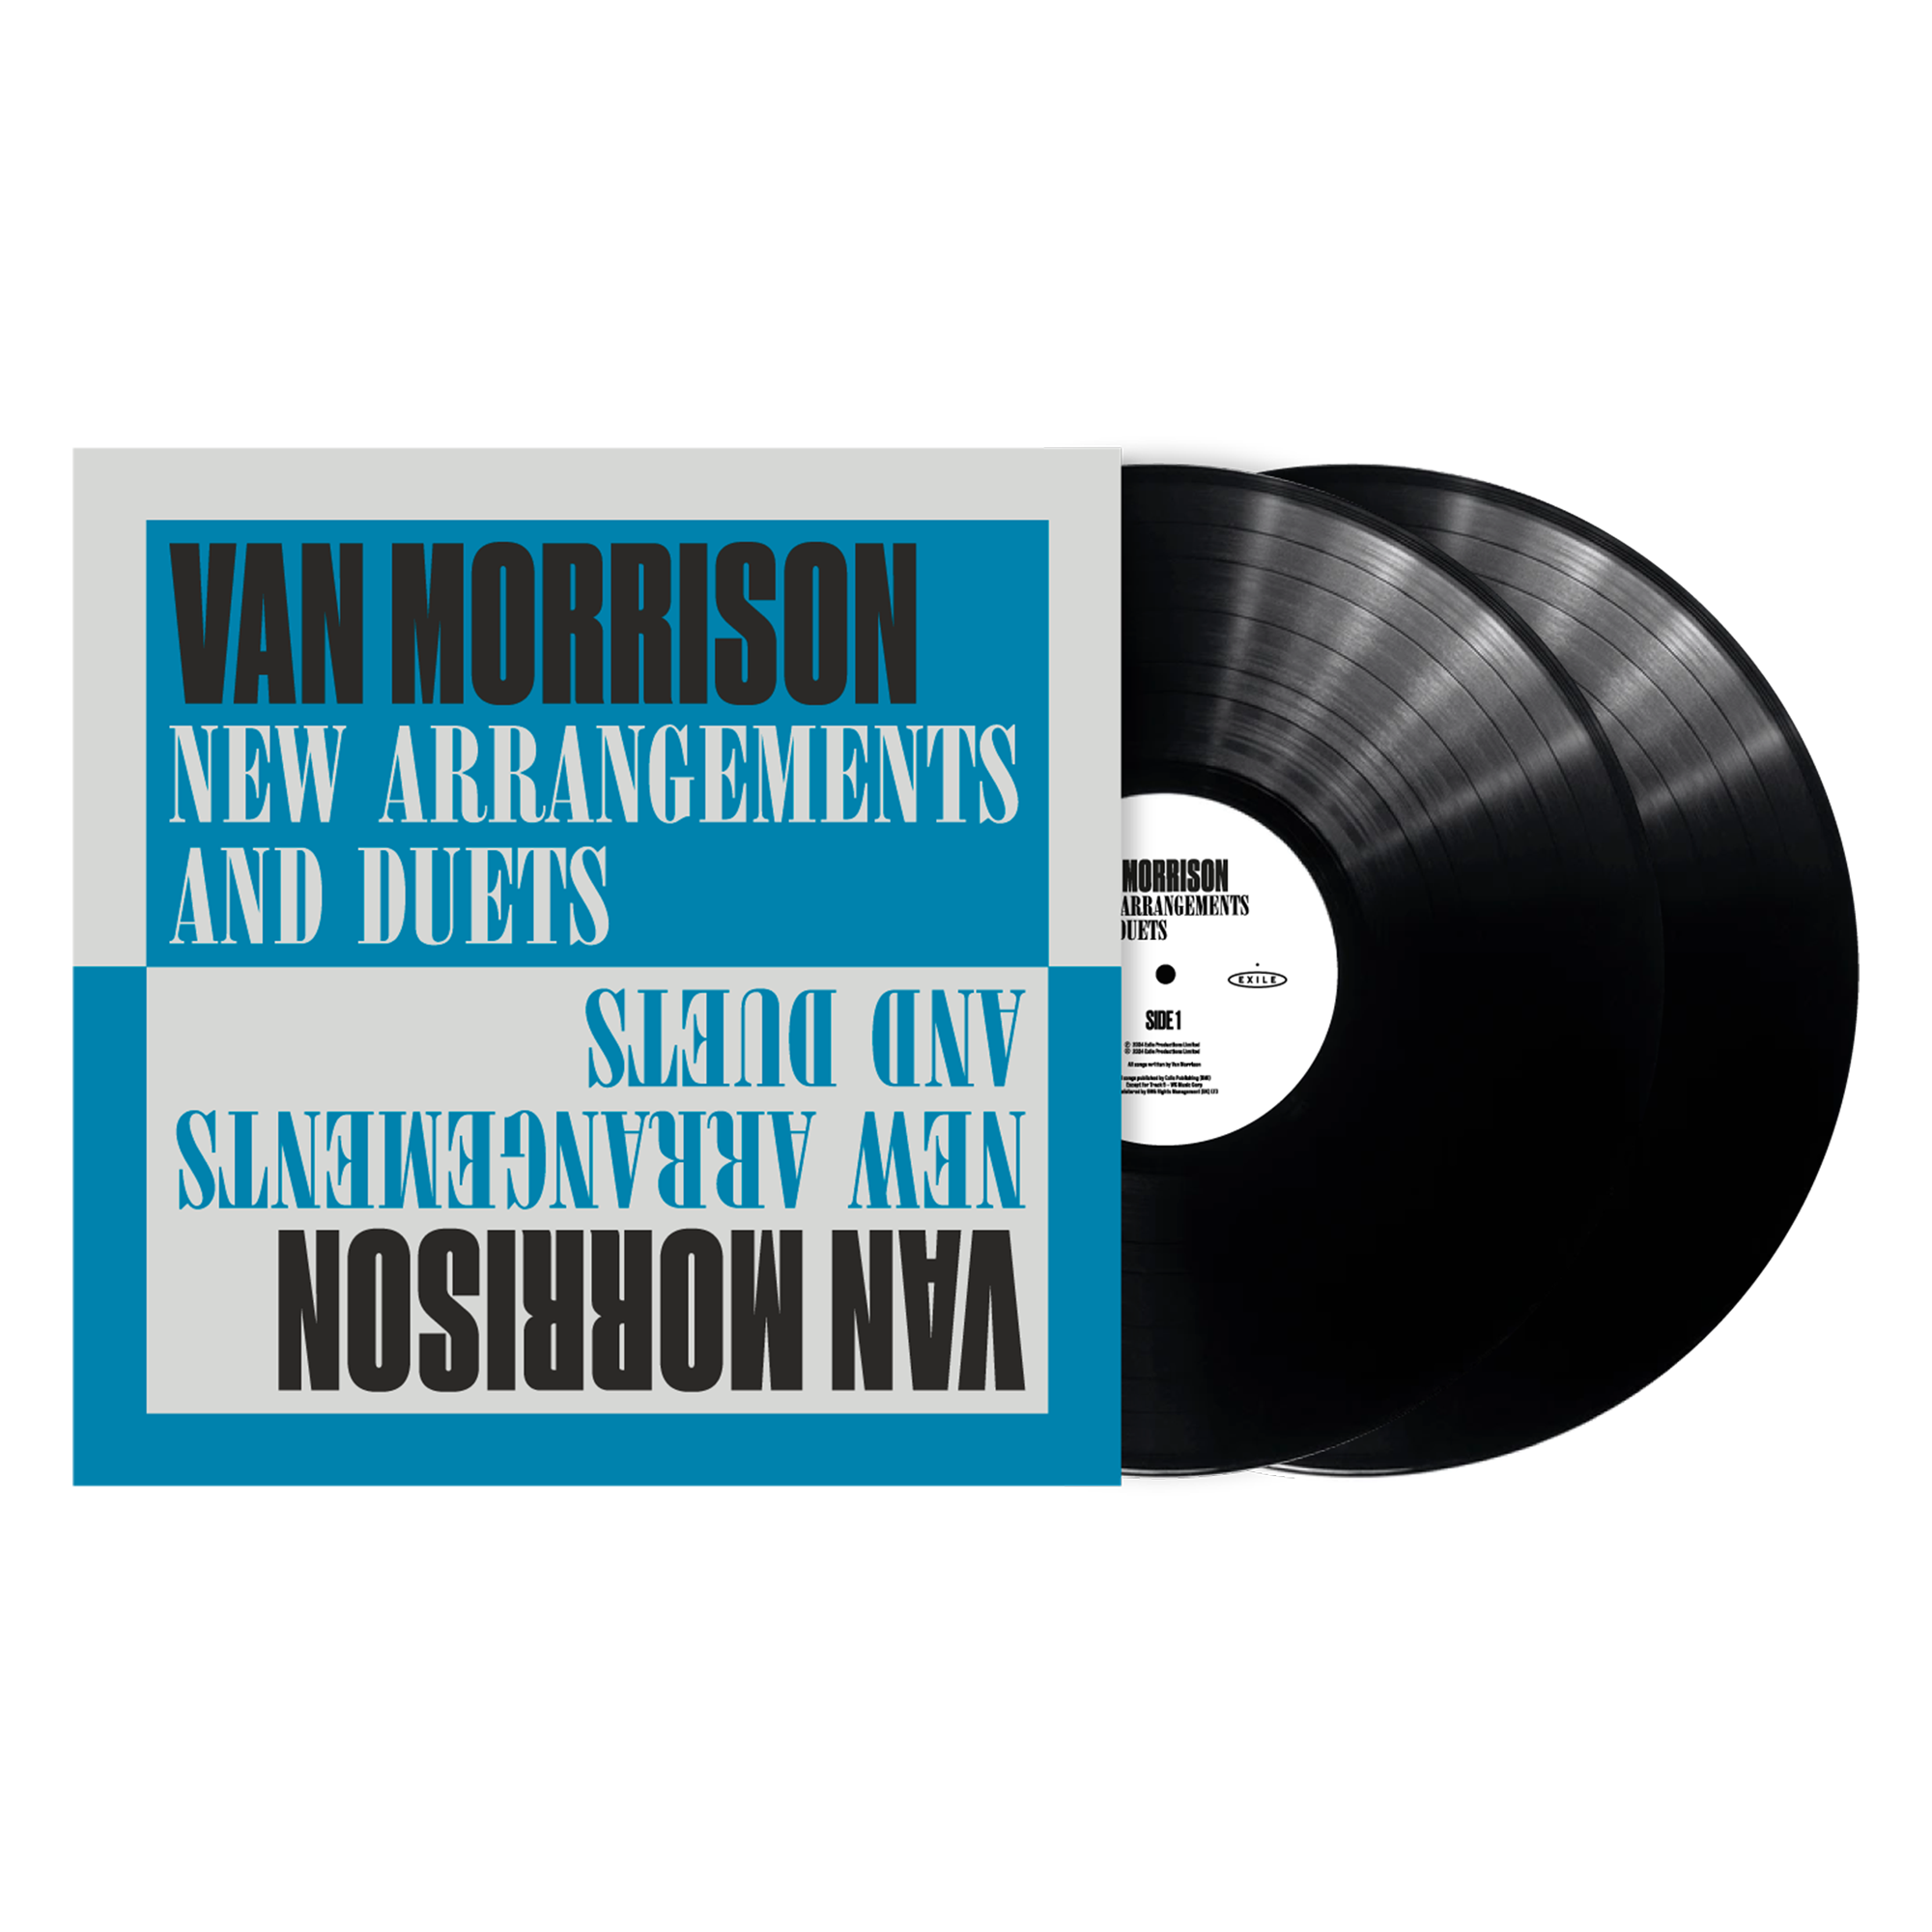 New Arrangements And Duets: Vinyl LP + Signed Print